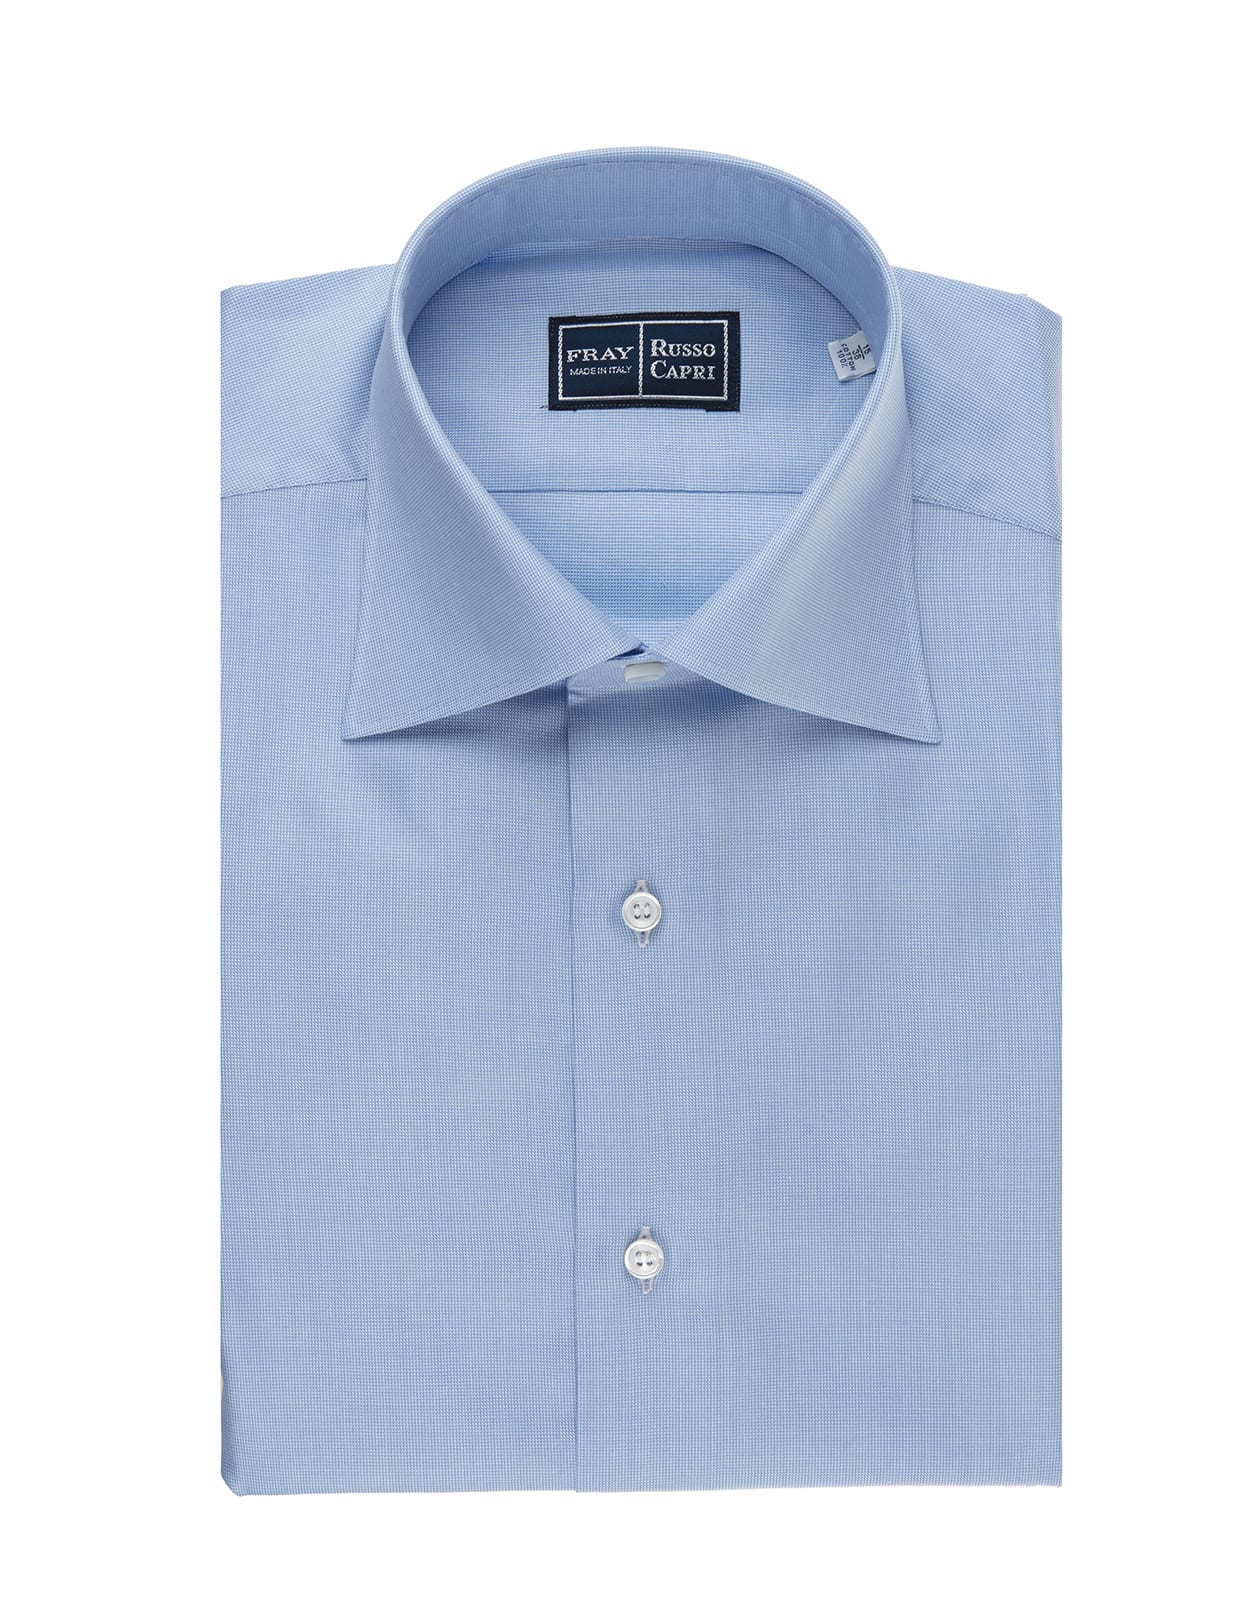 Regular Fit Shirt In Light Blue Oxford Cotton